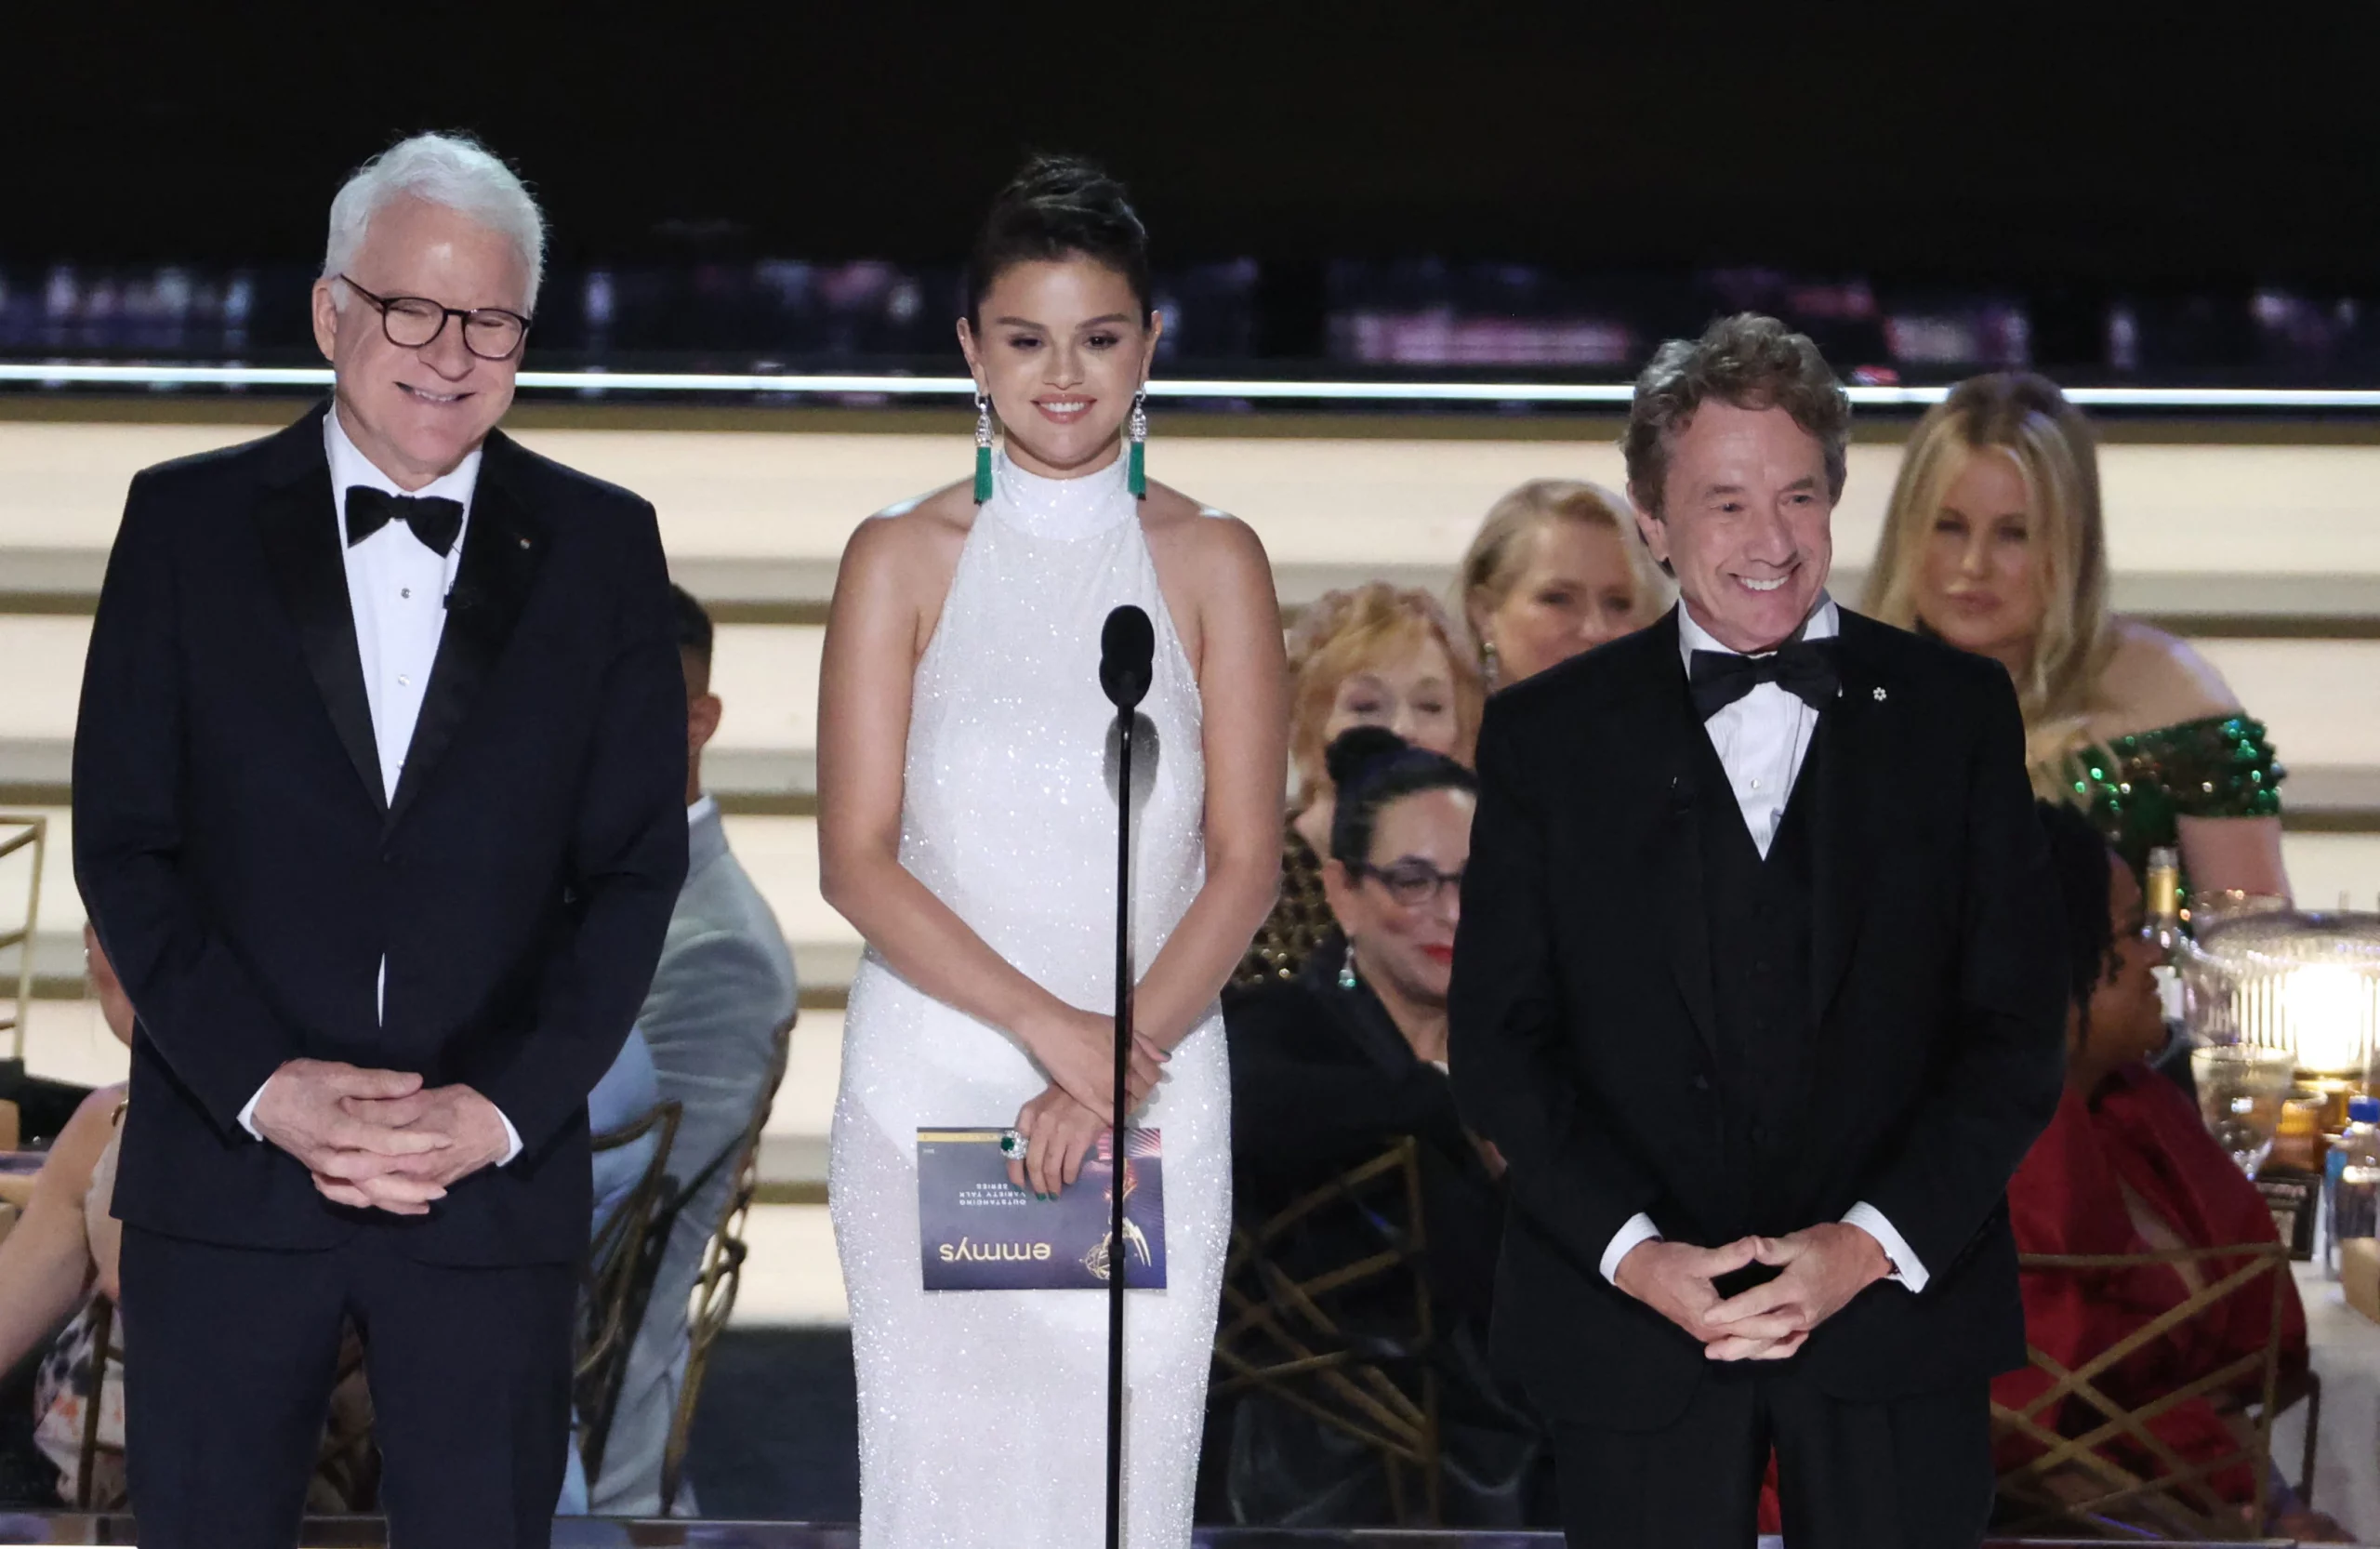 Singer & actress Selena Gomez had a wardrobe malfunction at the 2022 Emmys